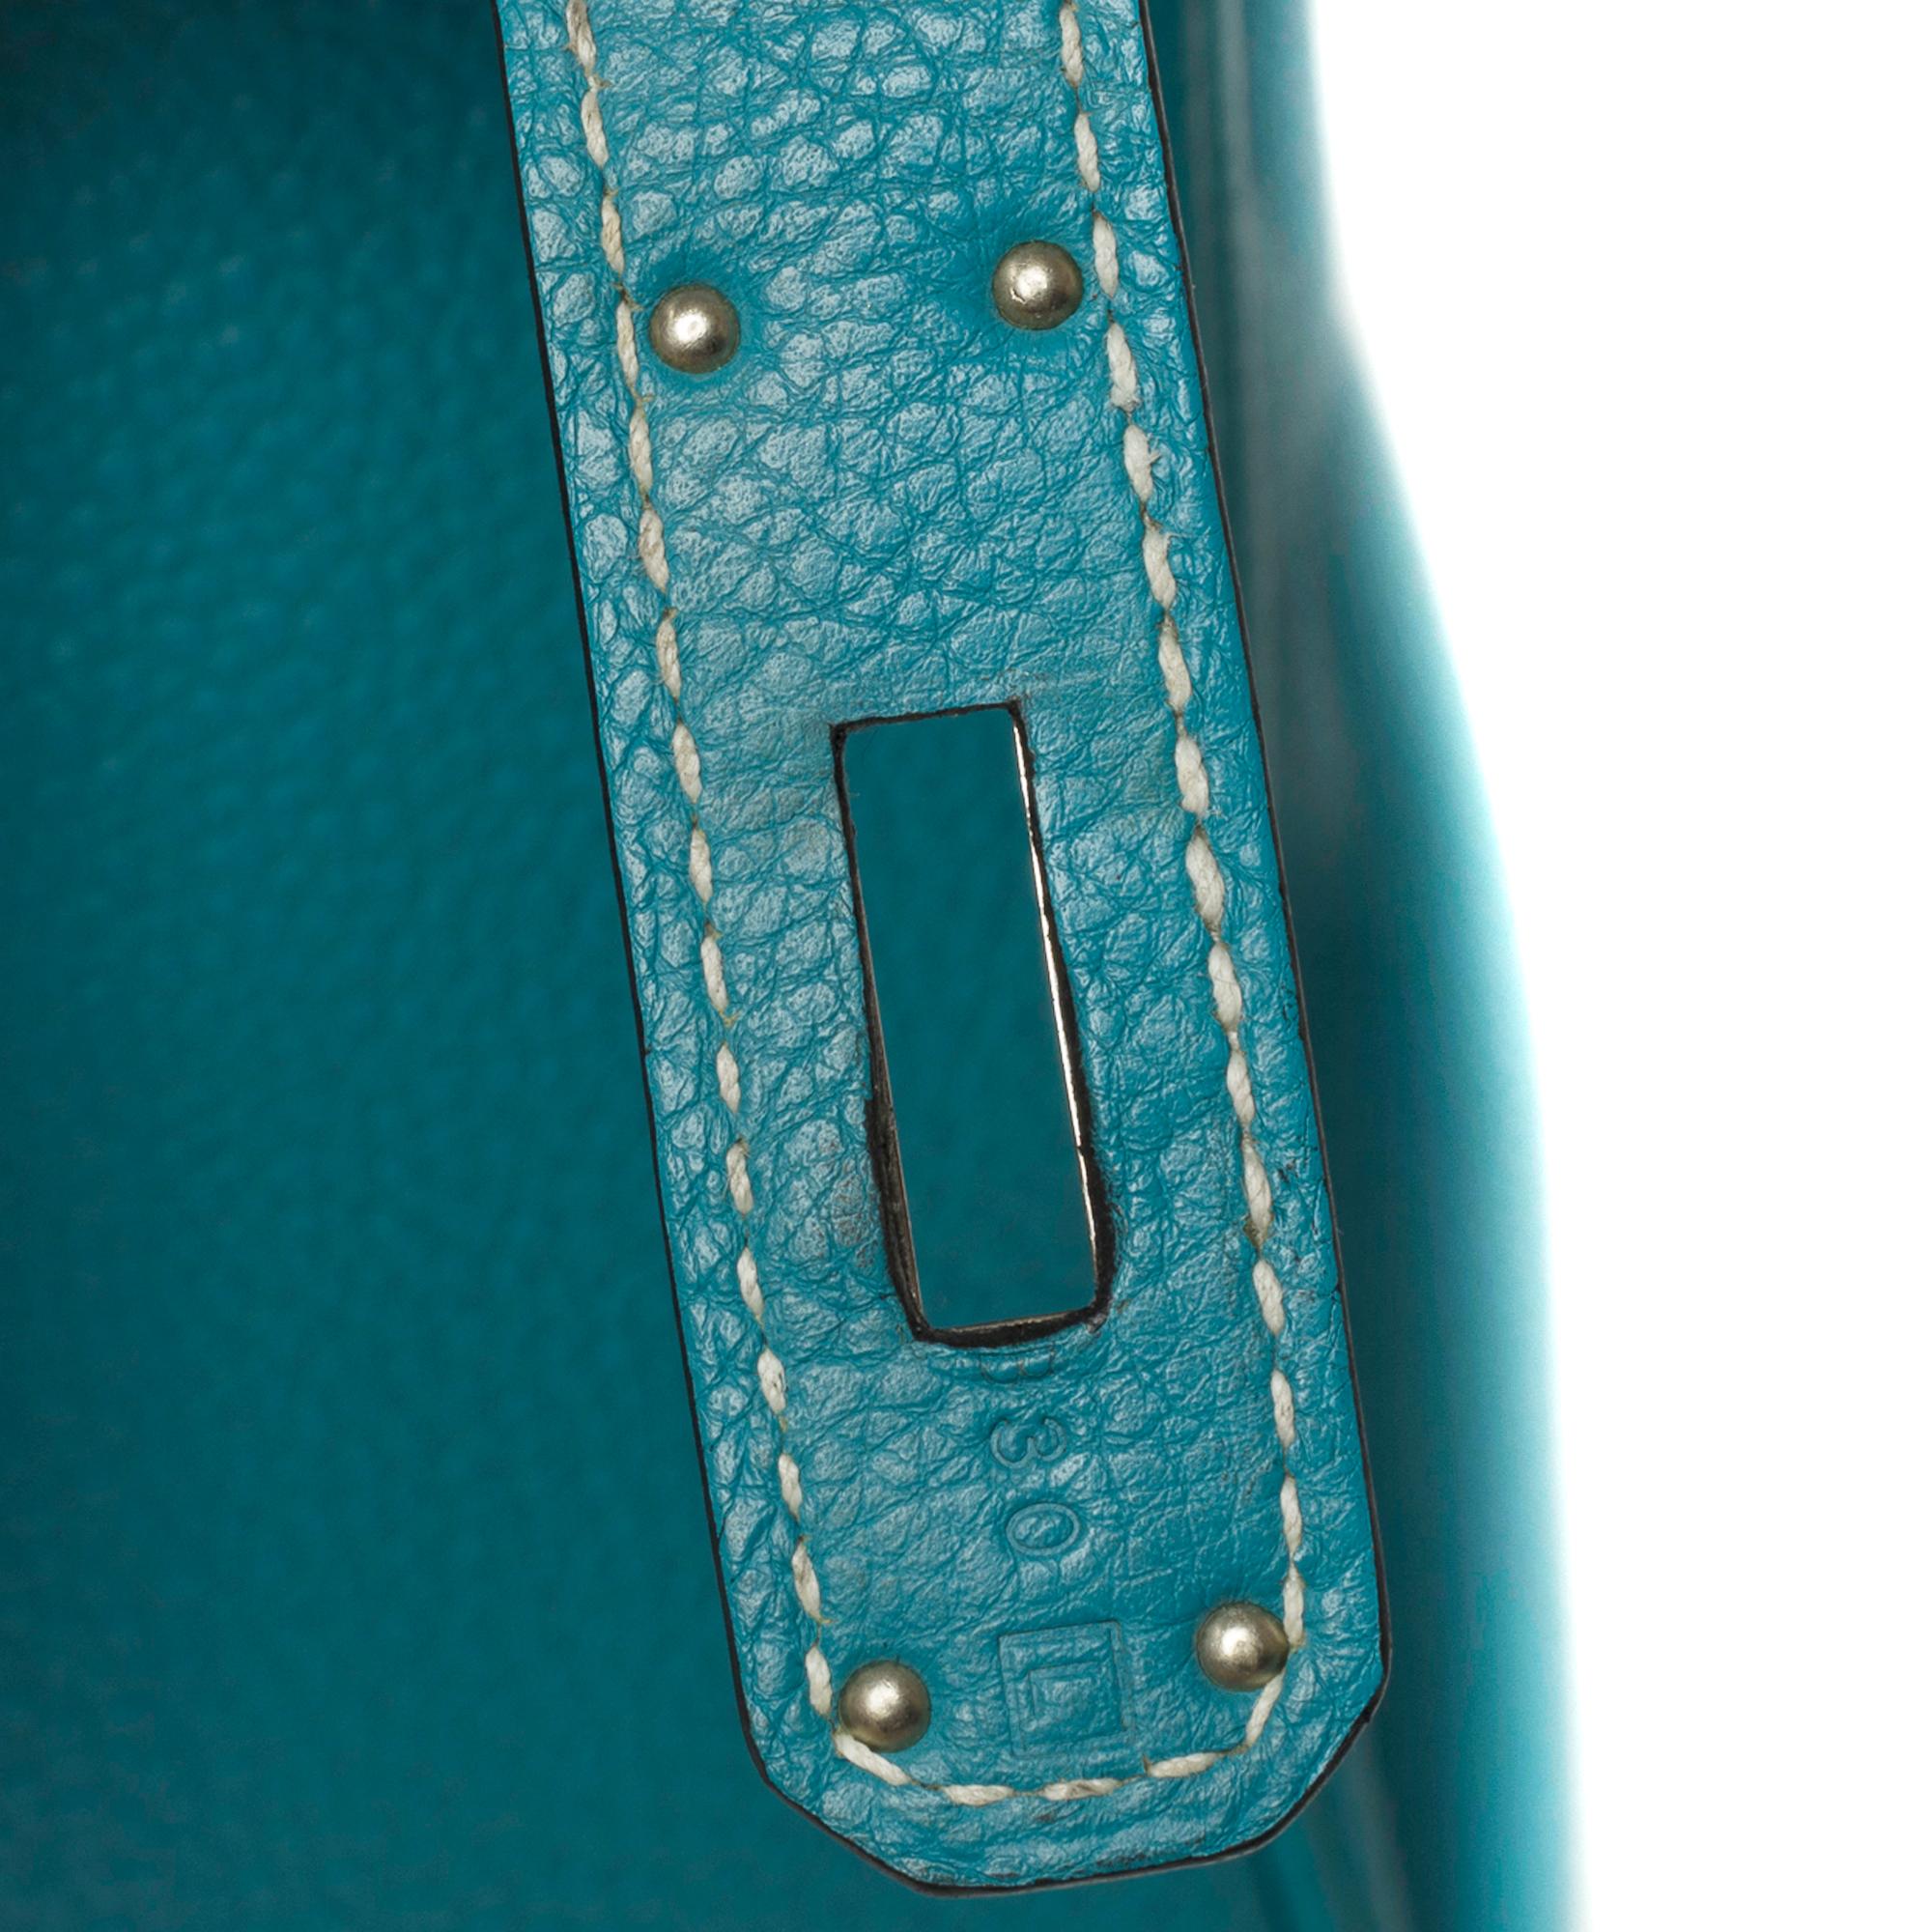 Splendid Hermes Birkin 30 handbag in Blue Jean Togo leather, SHW For Sale 4